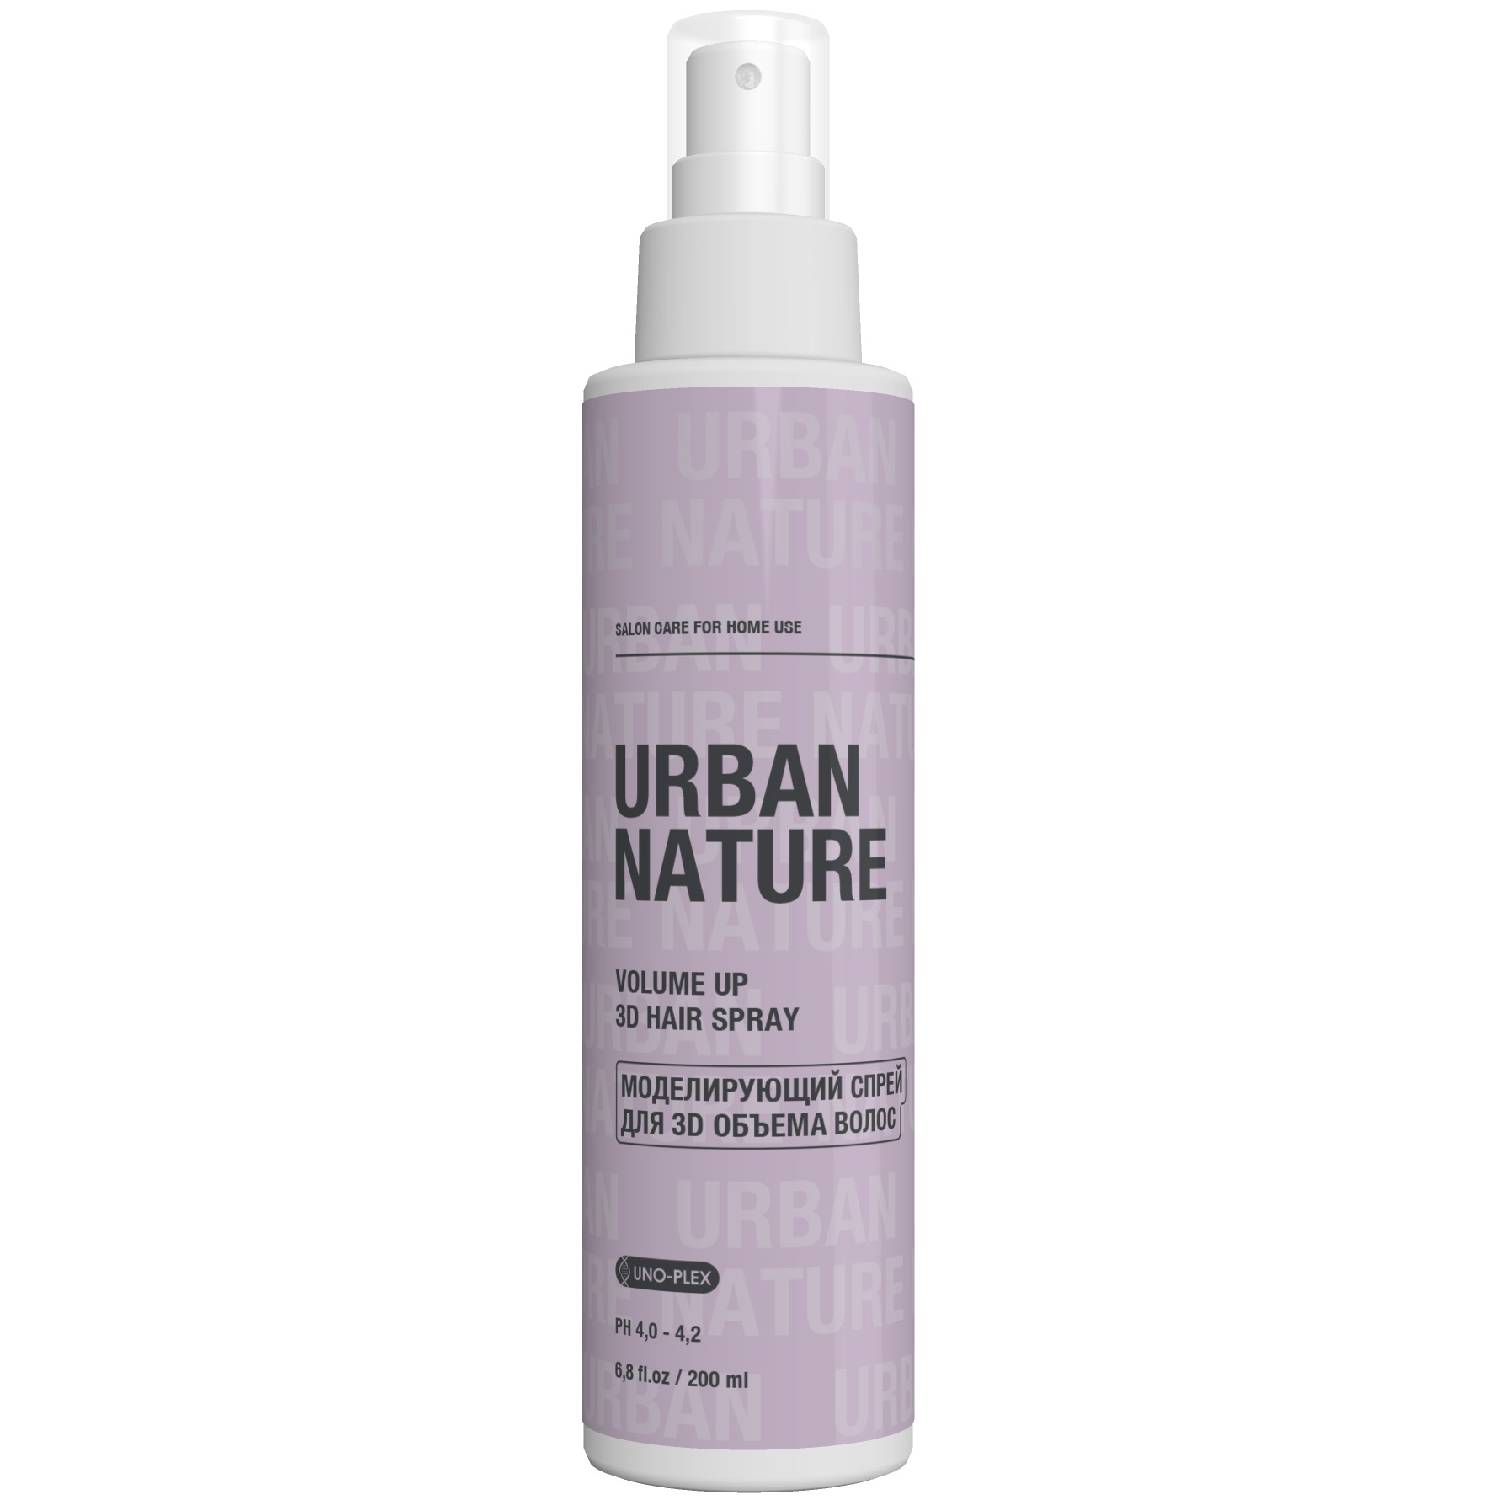 Urban Nature Моделирующий спрей для 3D объема волос, 200 мл (Urban Nature, Volume Up) фотографии